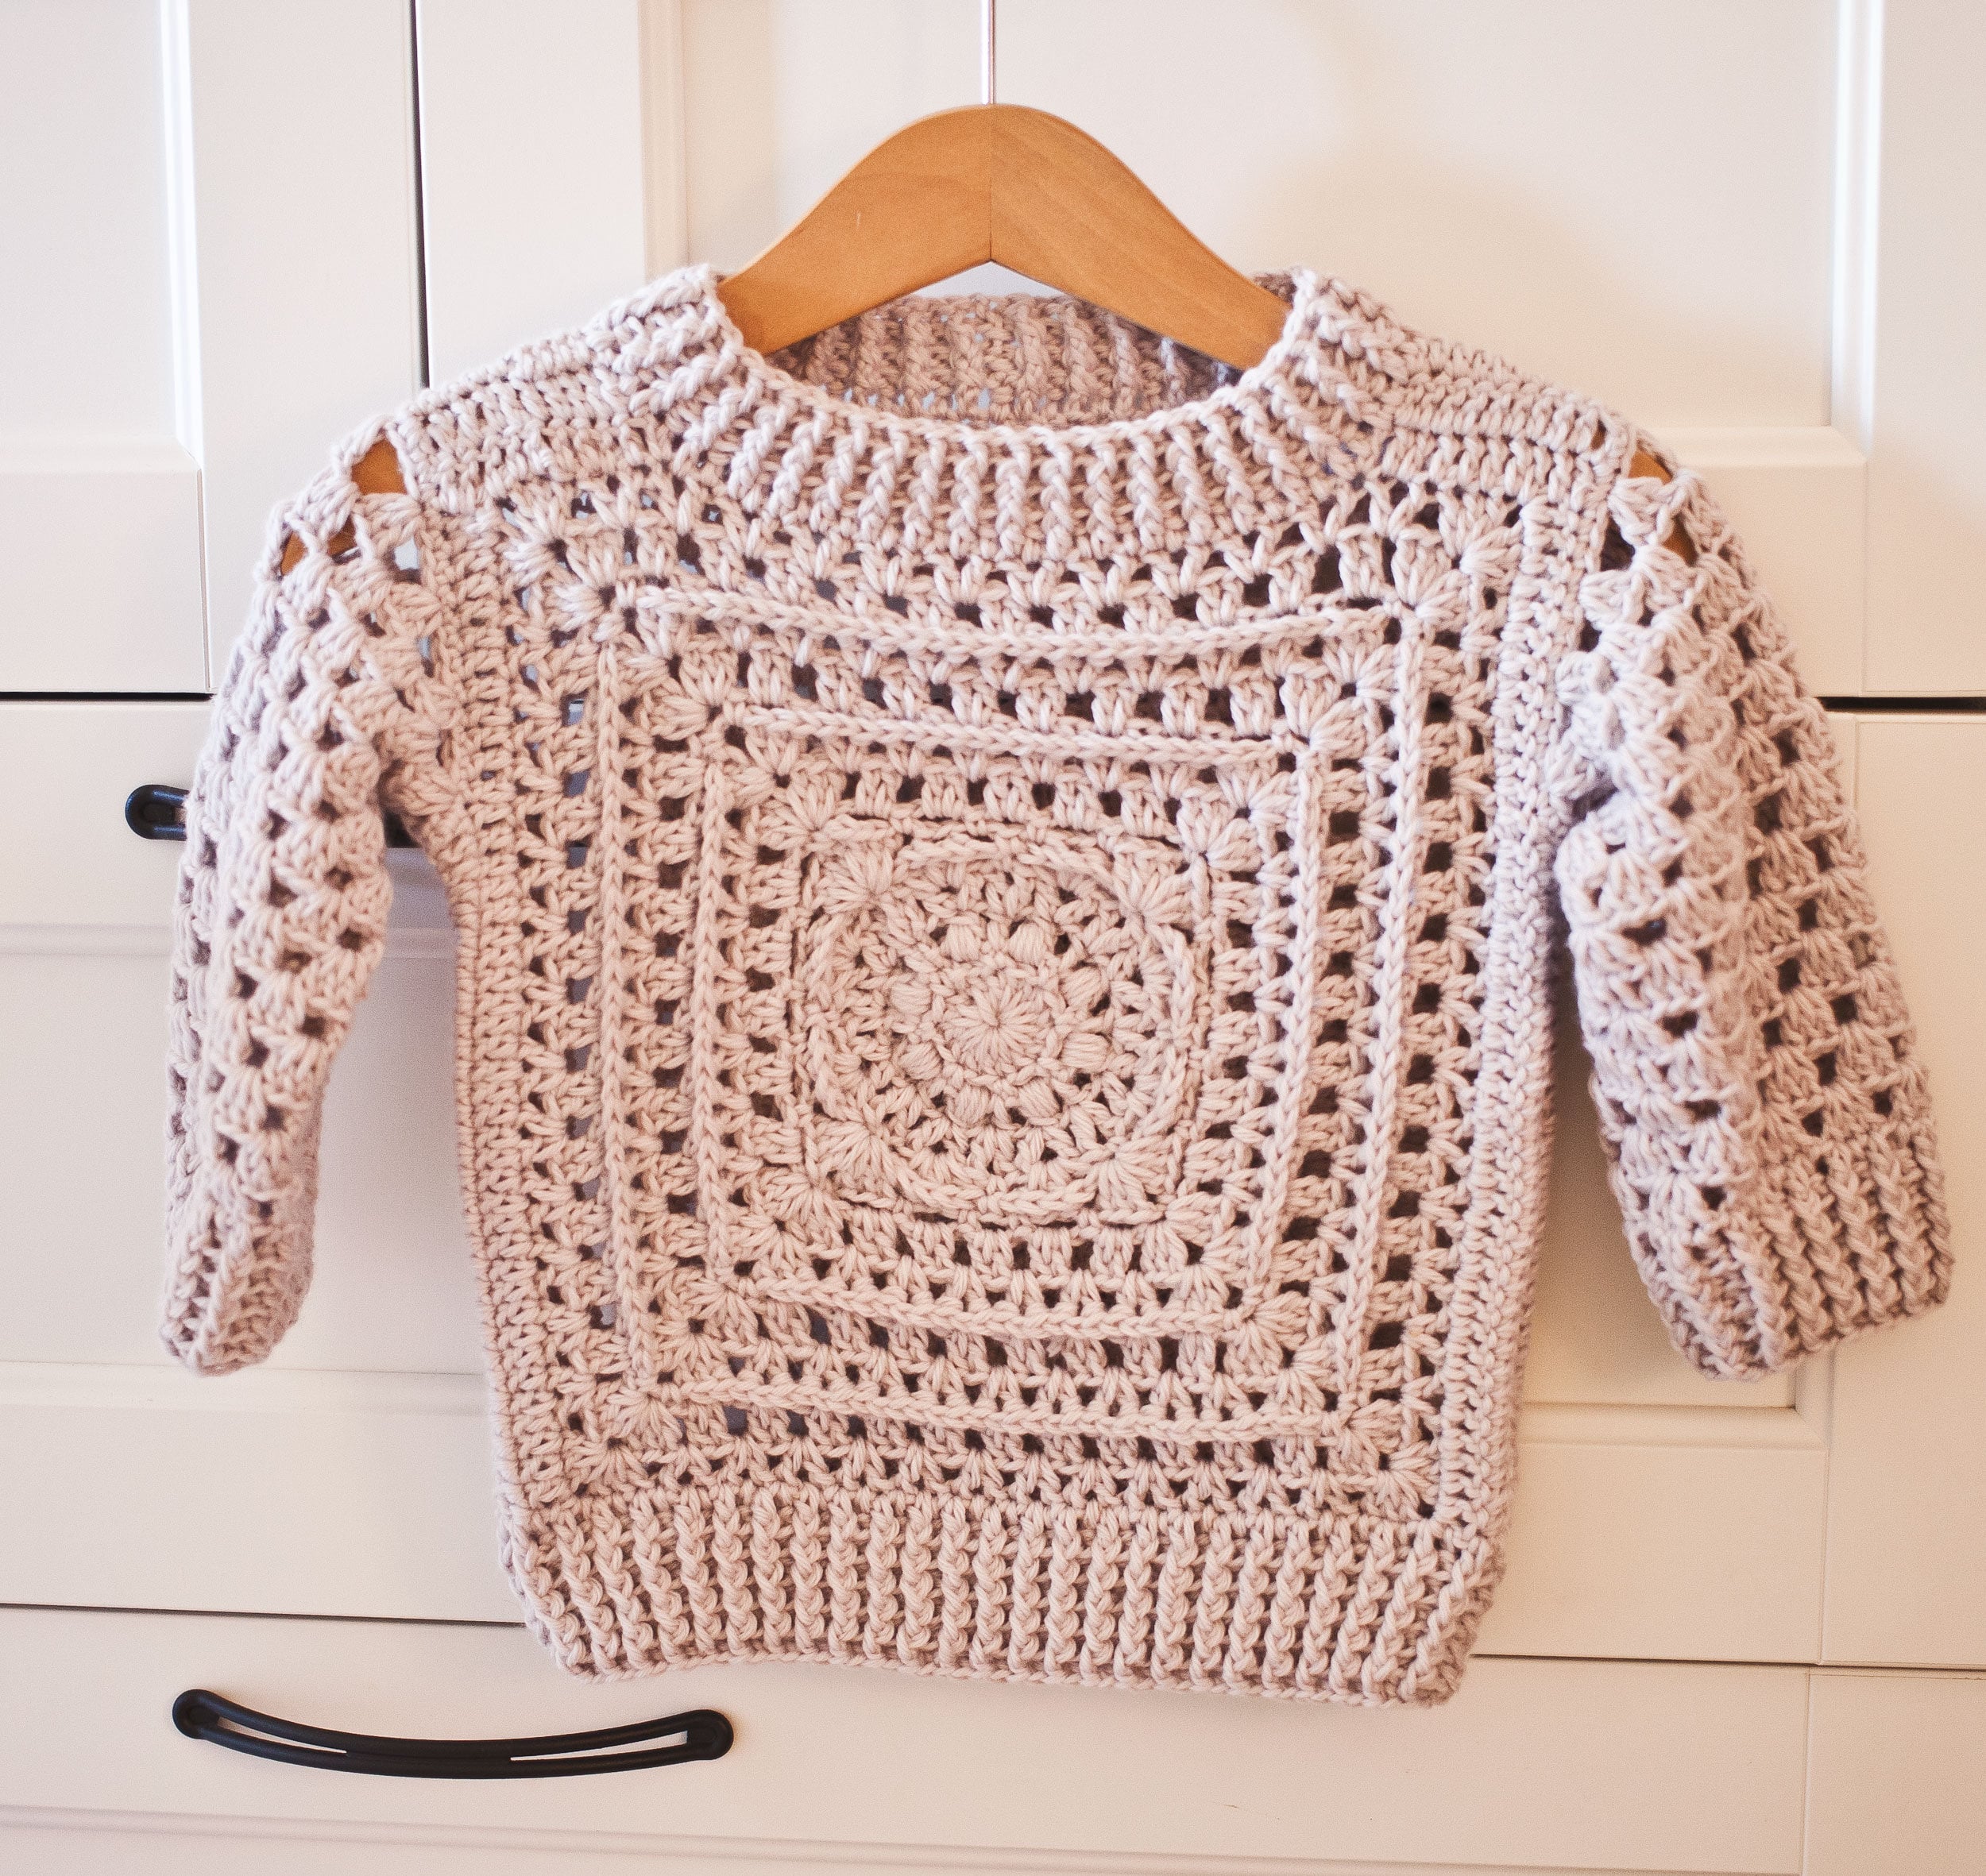 Crochet Dress PATTERN Pima Cotton Dress sizes up to 6 Years english Only 